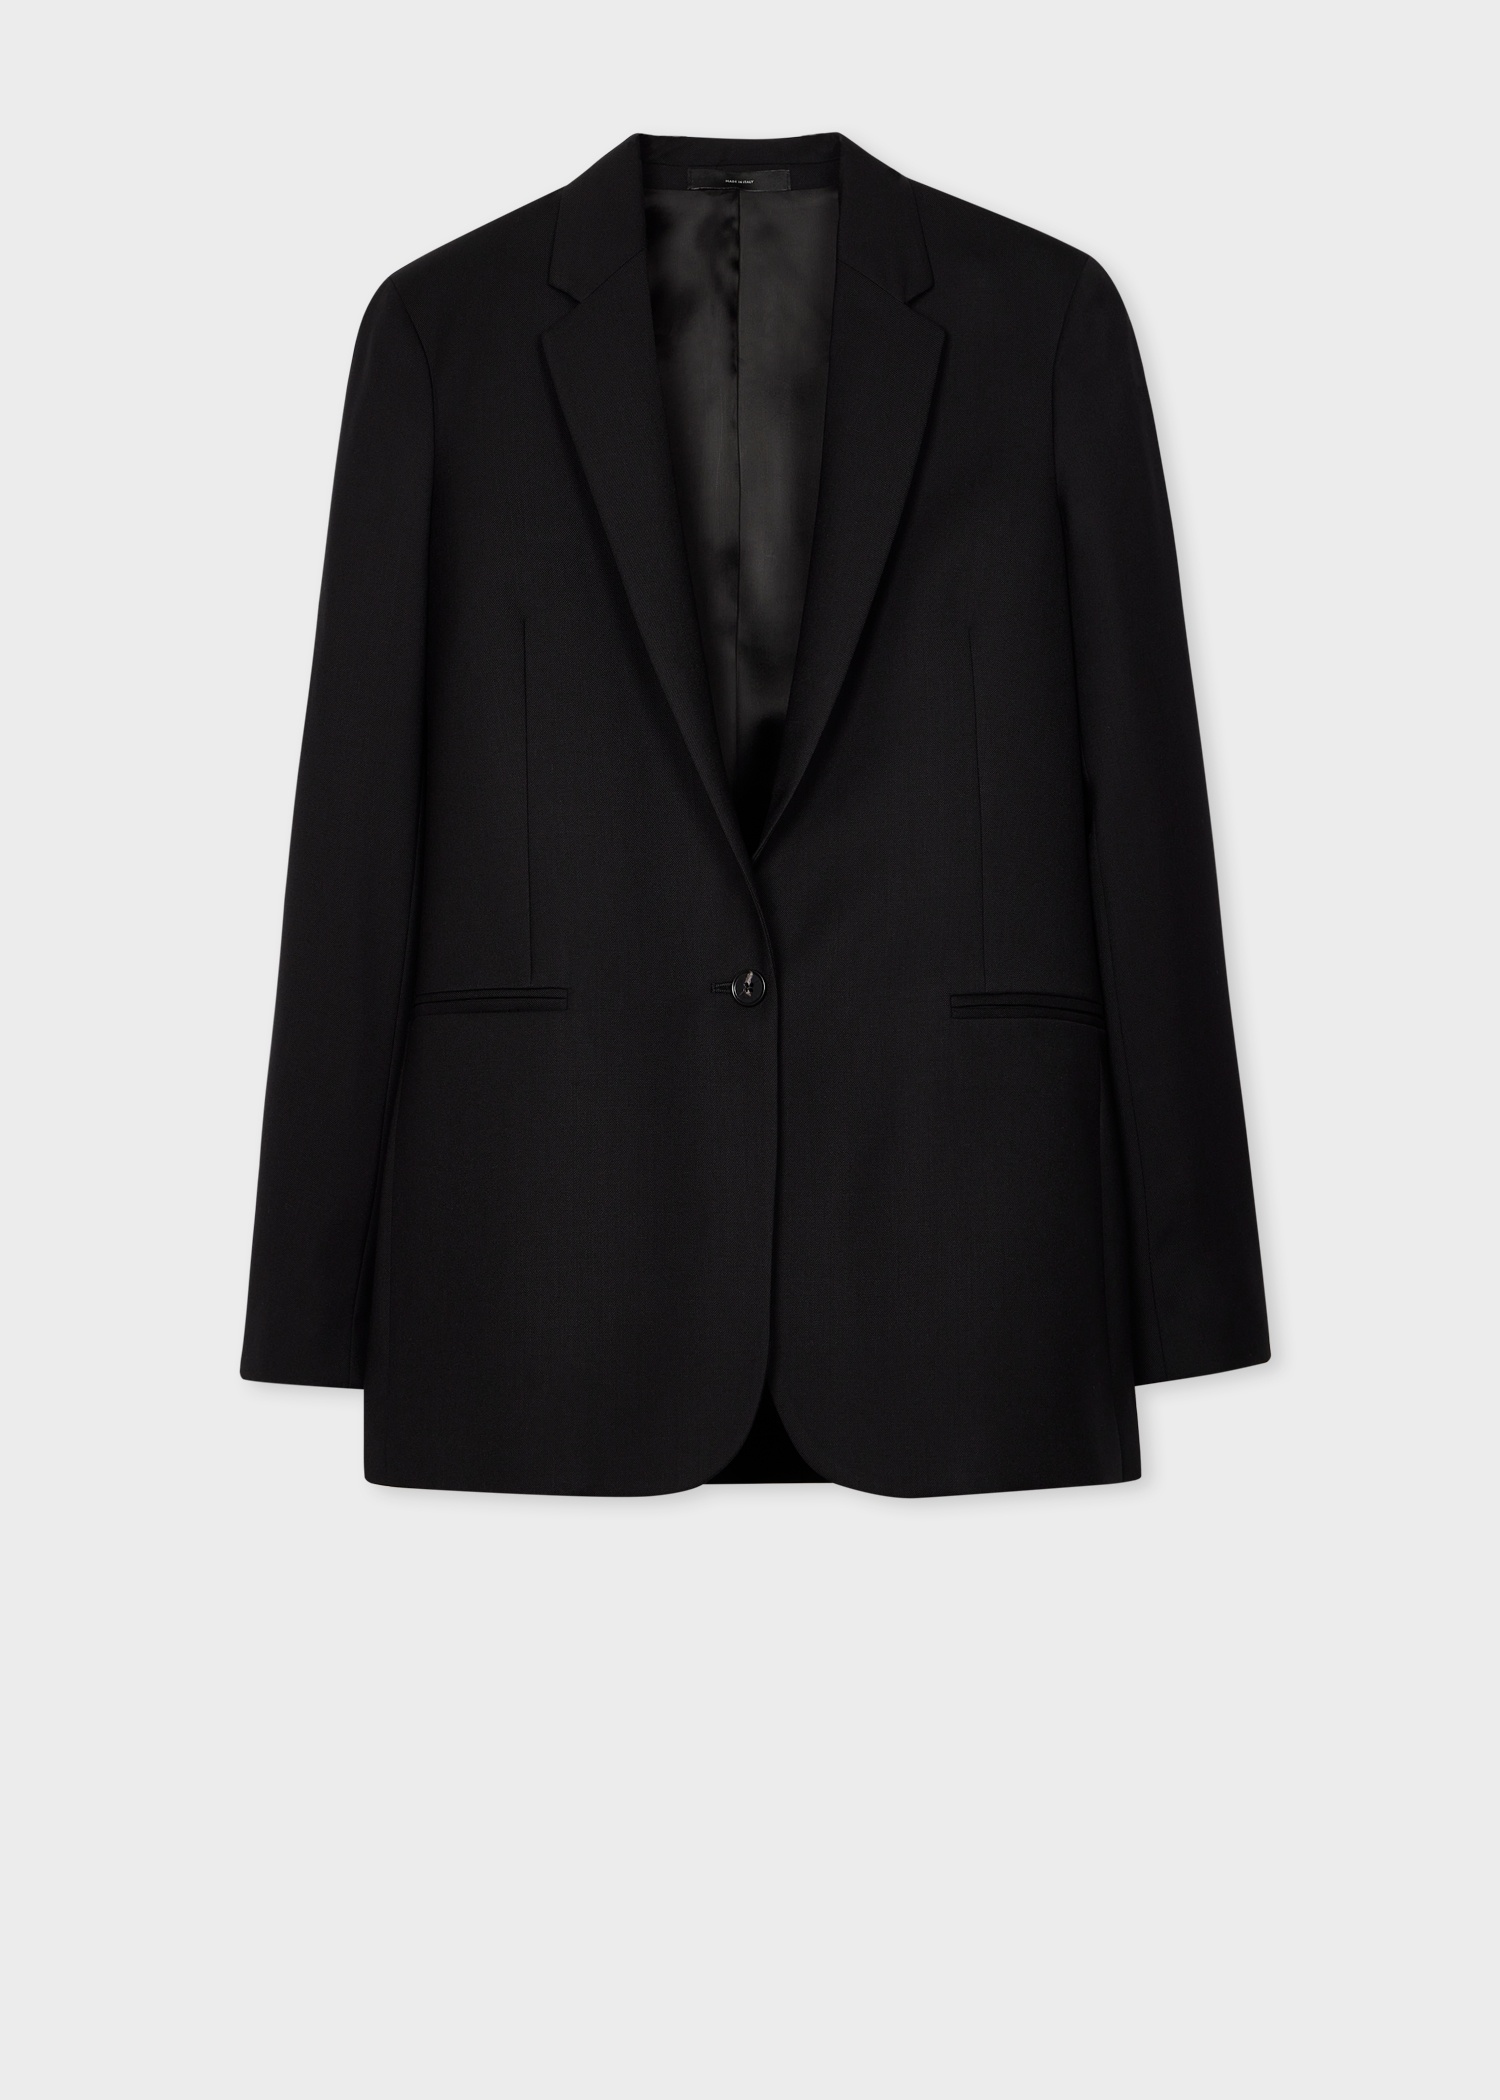 A Suit To Travel In - Women's Black Wool Travel Blazer - 1